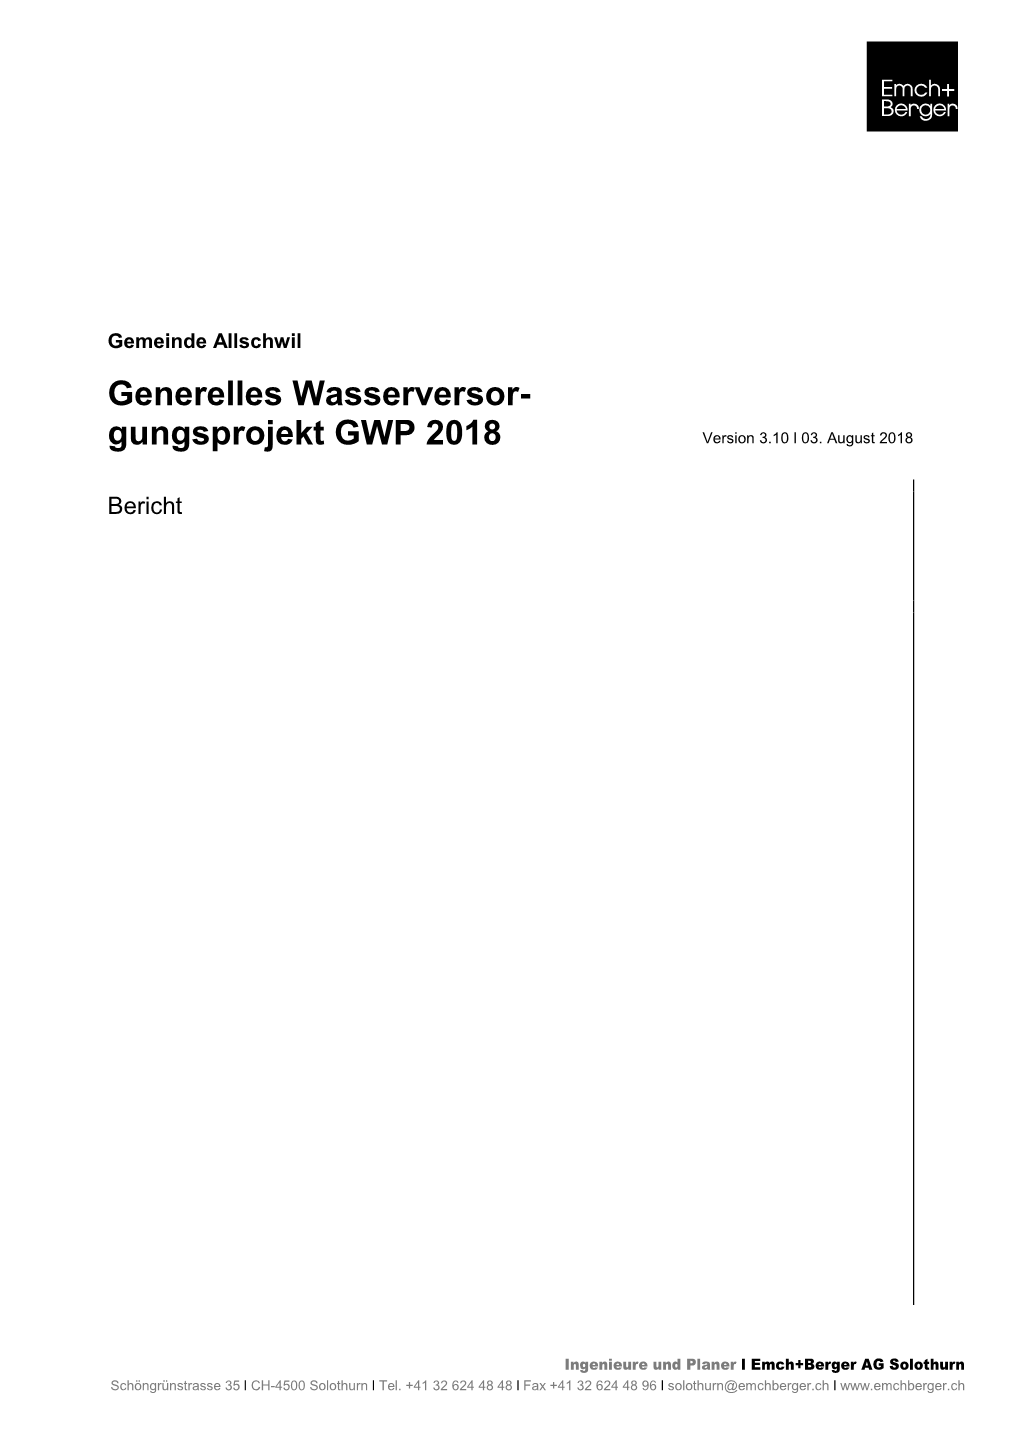 Generelles Wasserversor- Gungsprojekt GWP 2018 Version 3.10 L 03